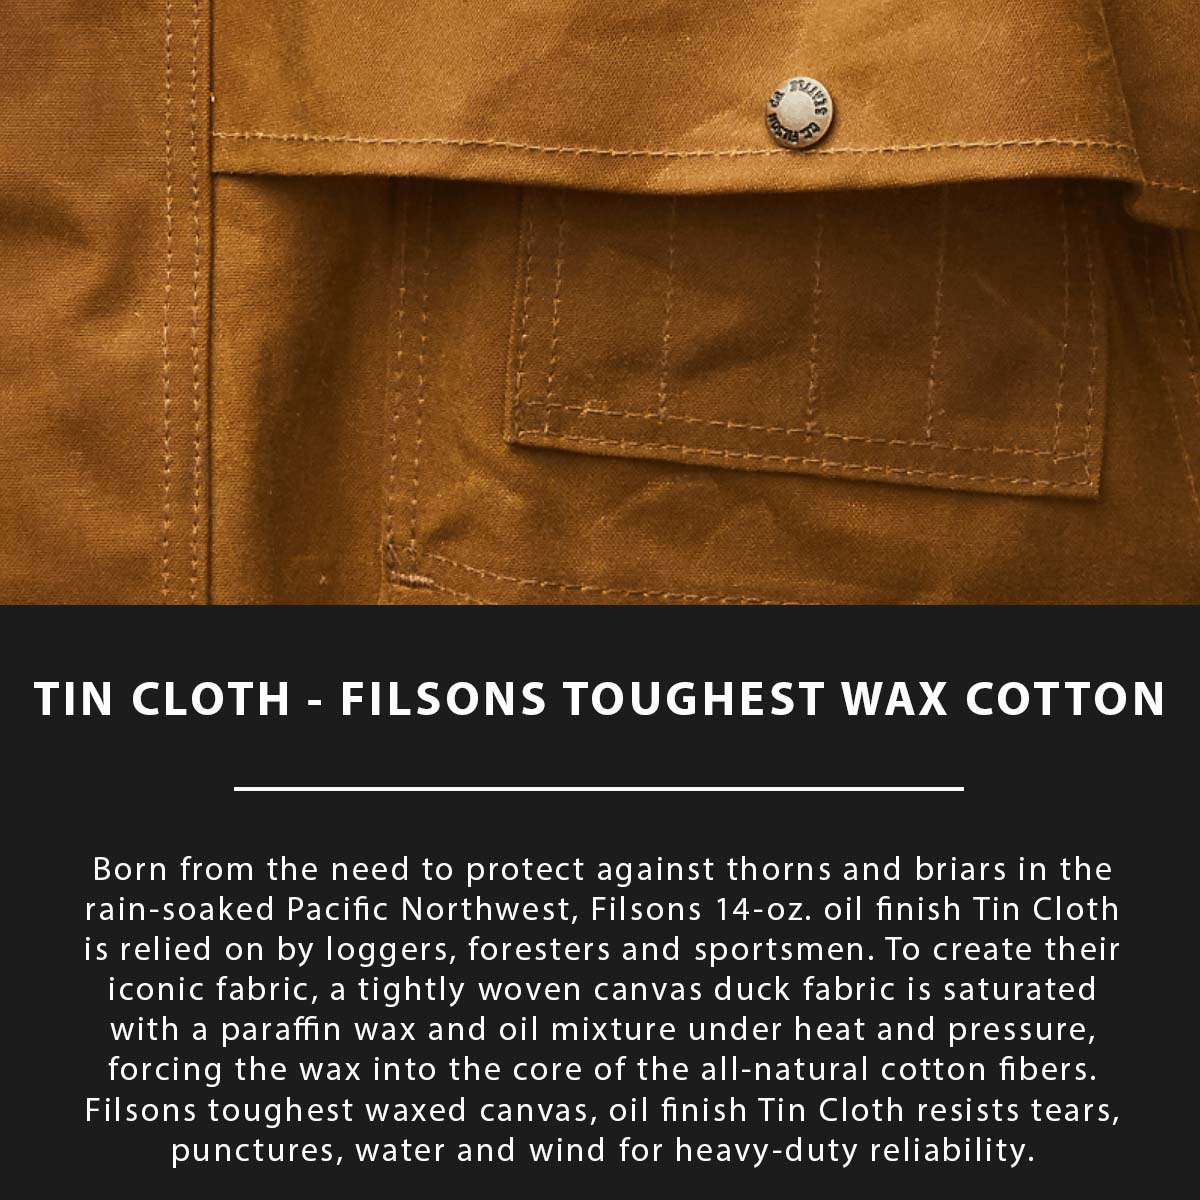 Tin Cloth, Filsons toughest wax cotton